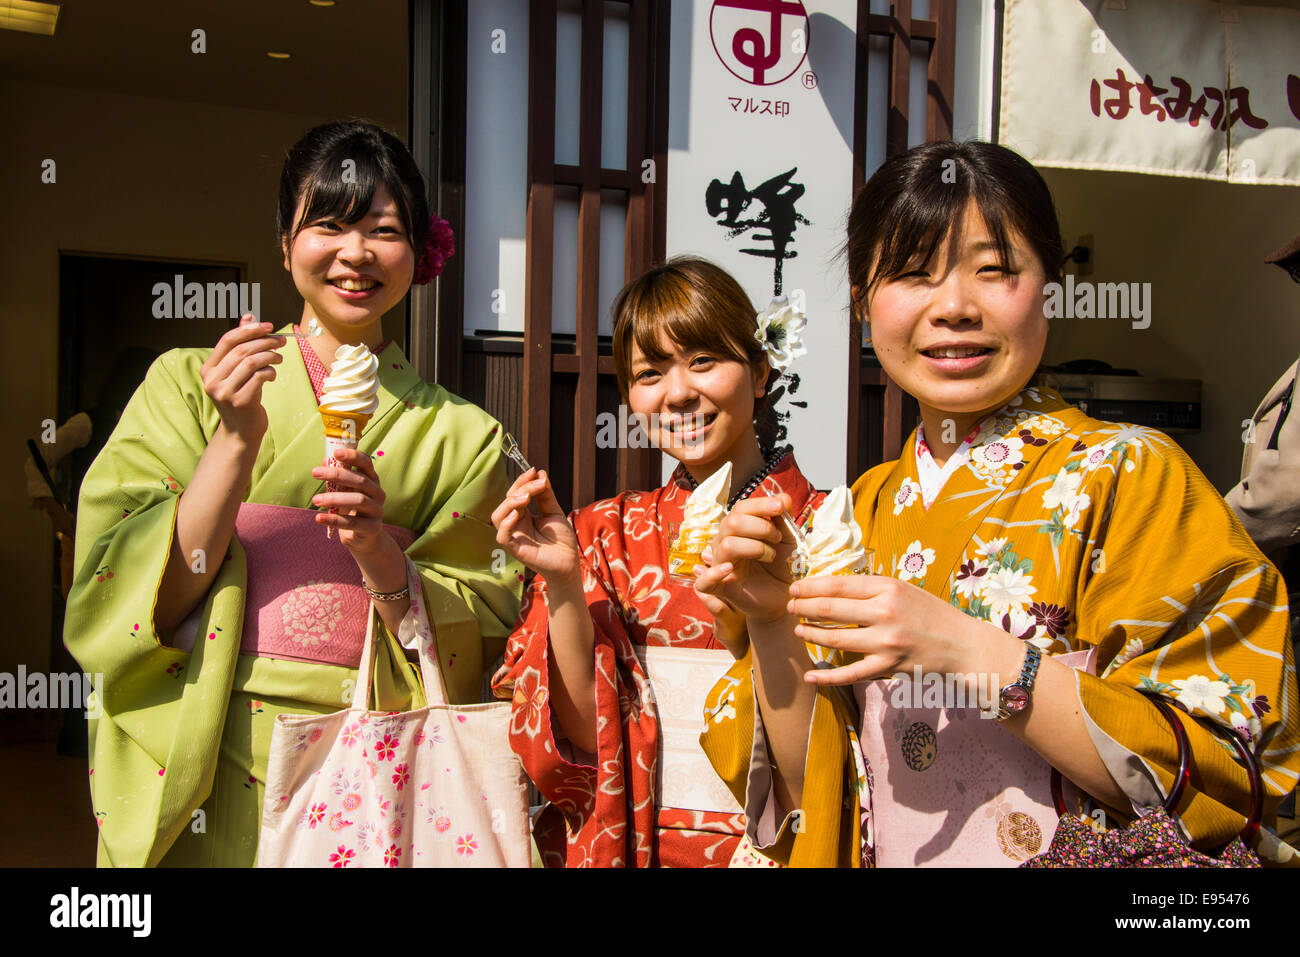 Traditionally dressed girls eating icecream, Kyoto, Japan Stock Photo